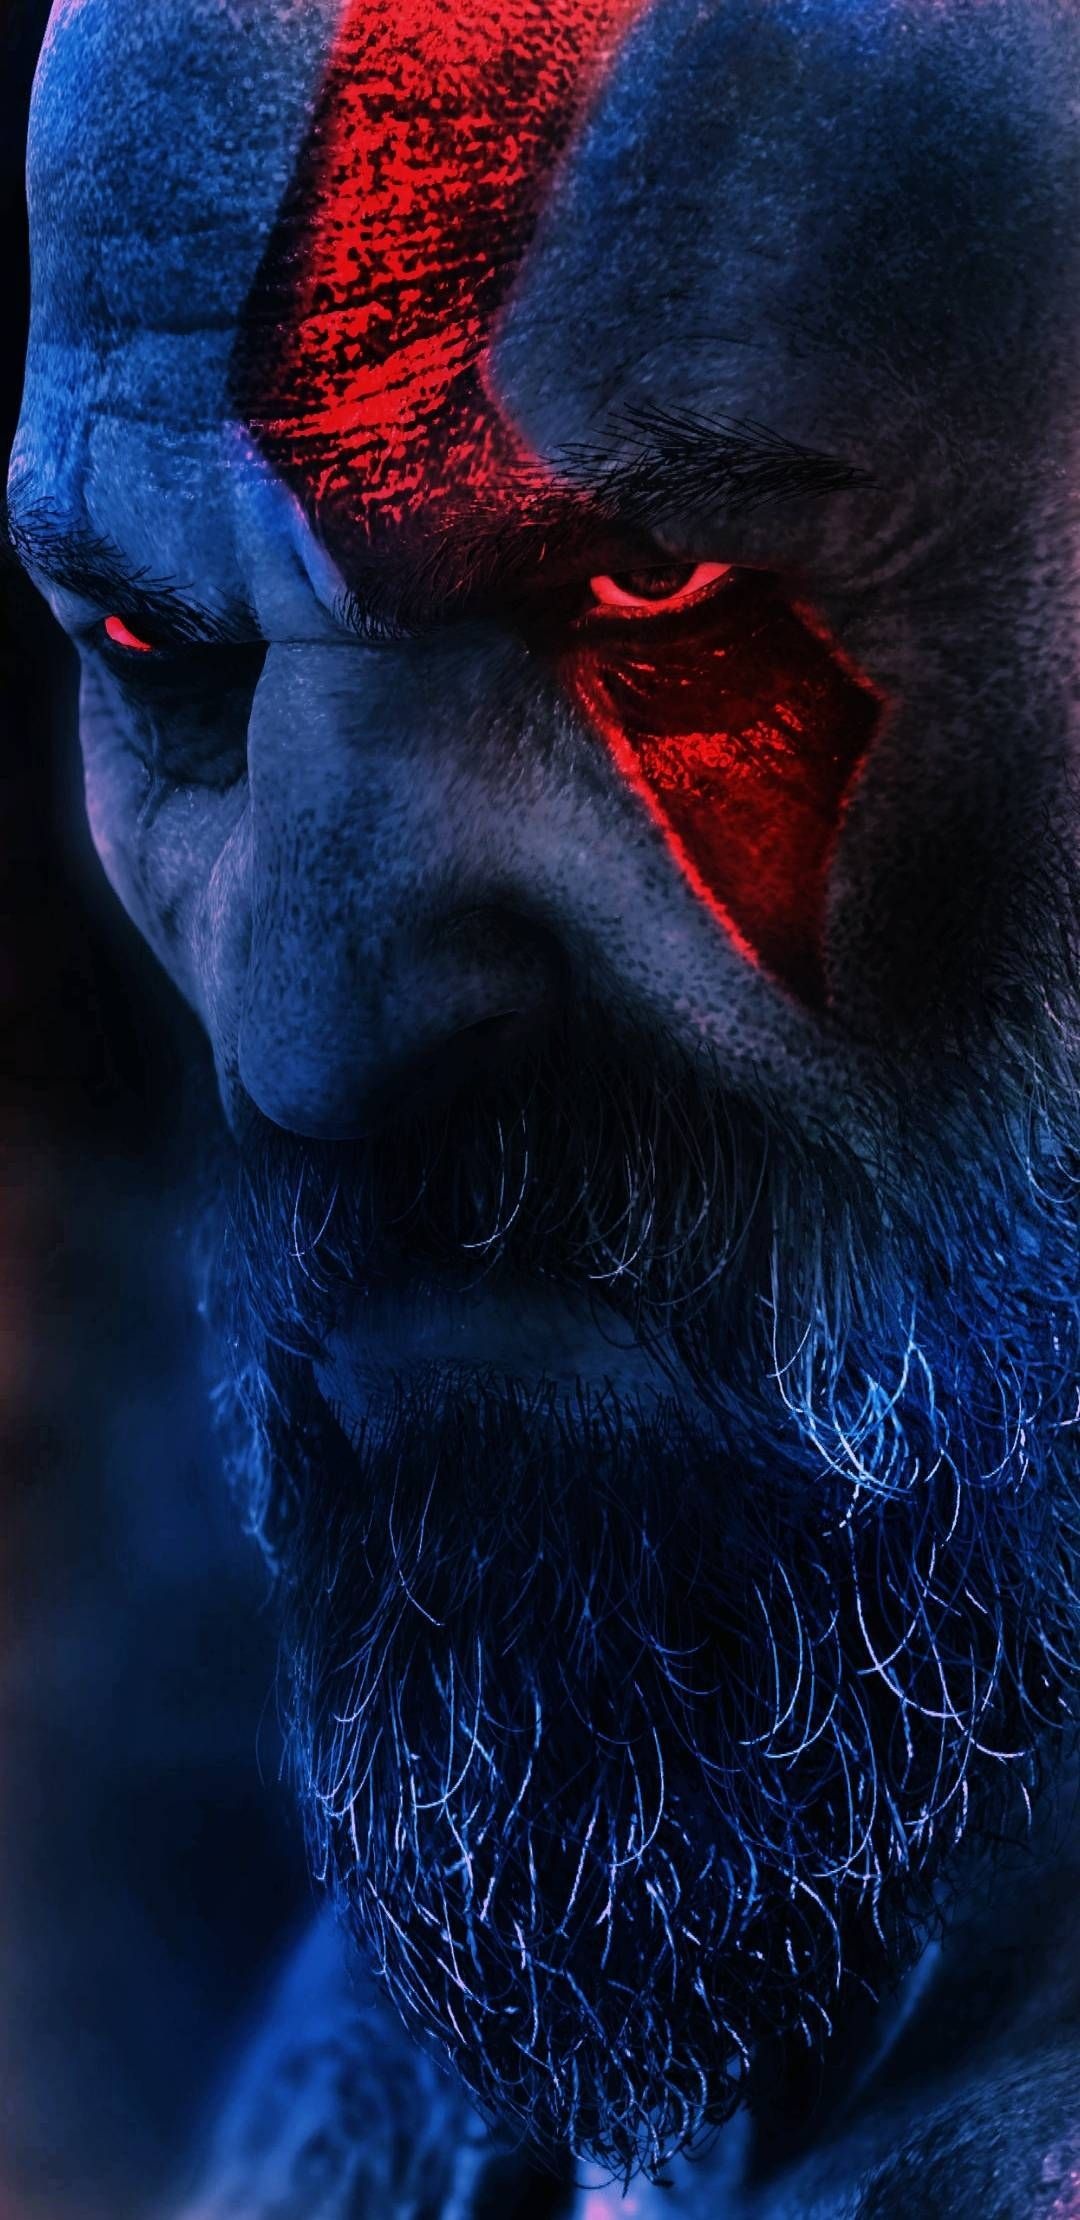 God of War phone wallpaper, Nokia gaming theme, Kratos's fierce presence, 1080x2220 HD Phone